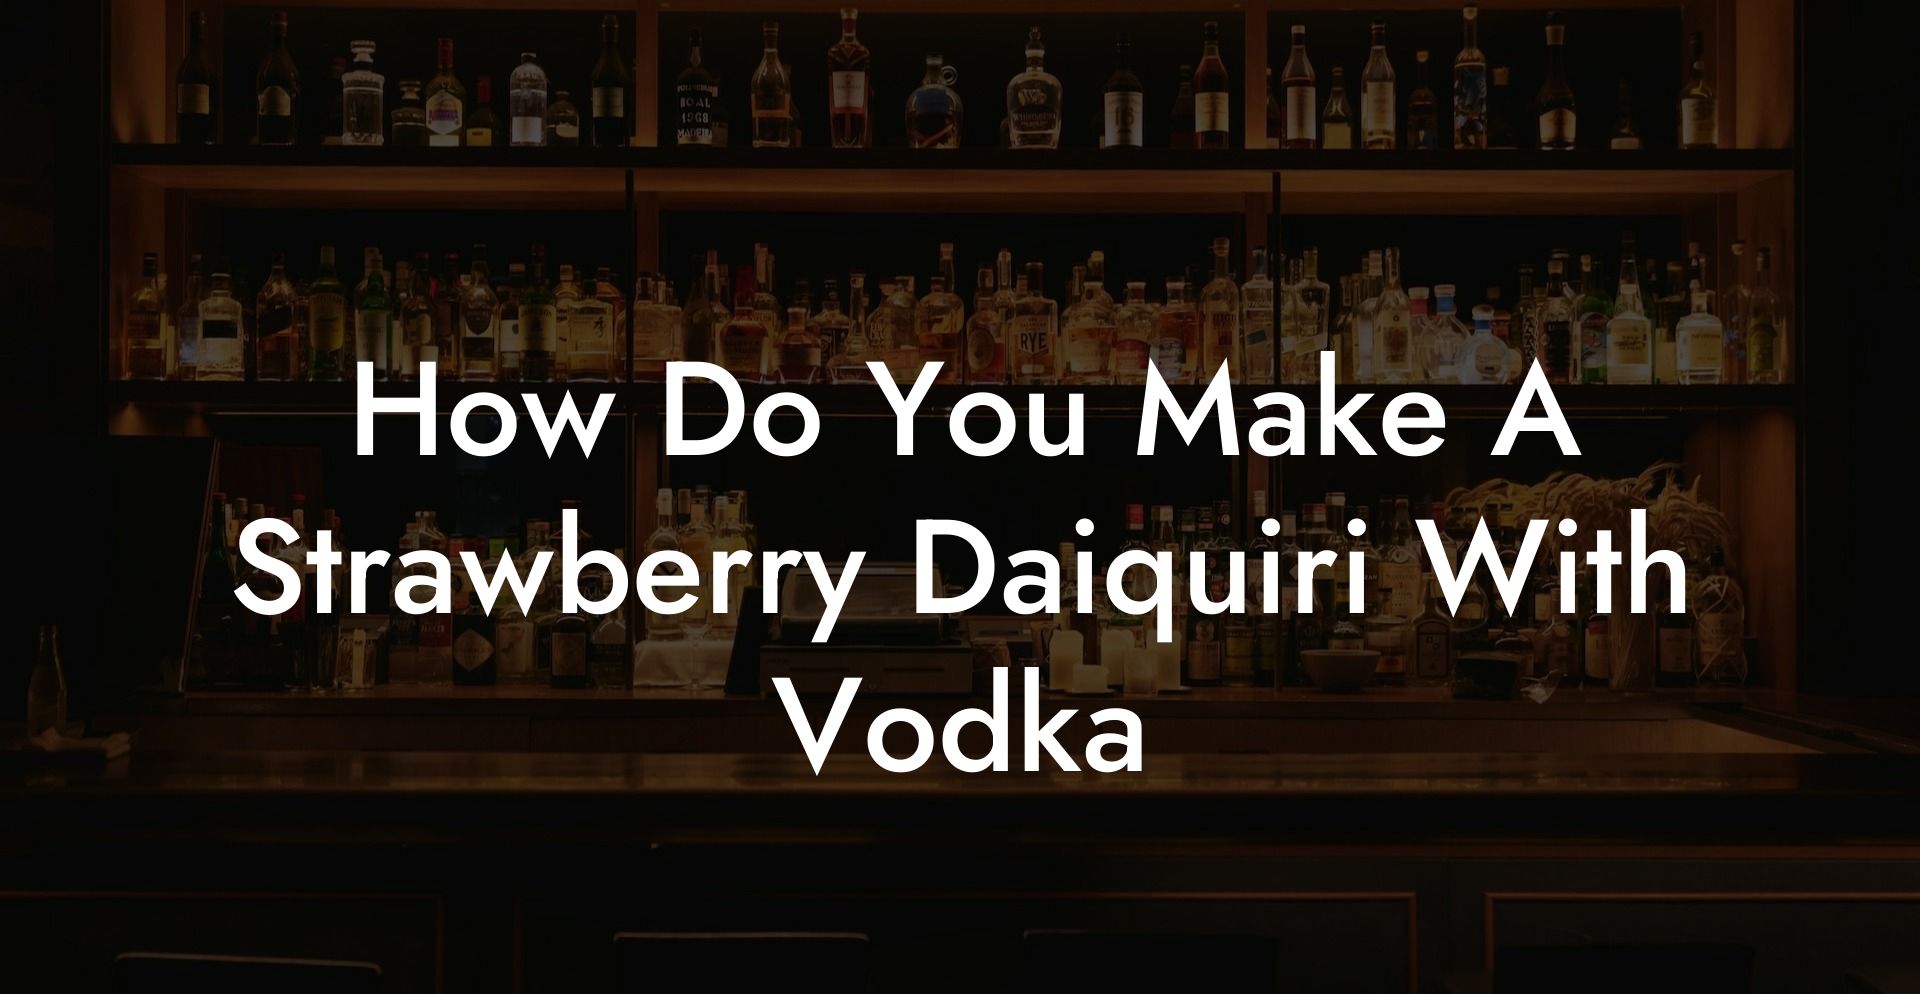 How Do You Make A Strawberry Daiquiri With Vodka